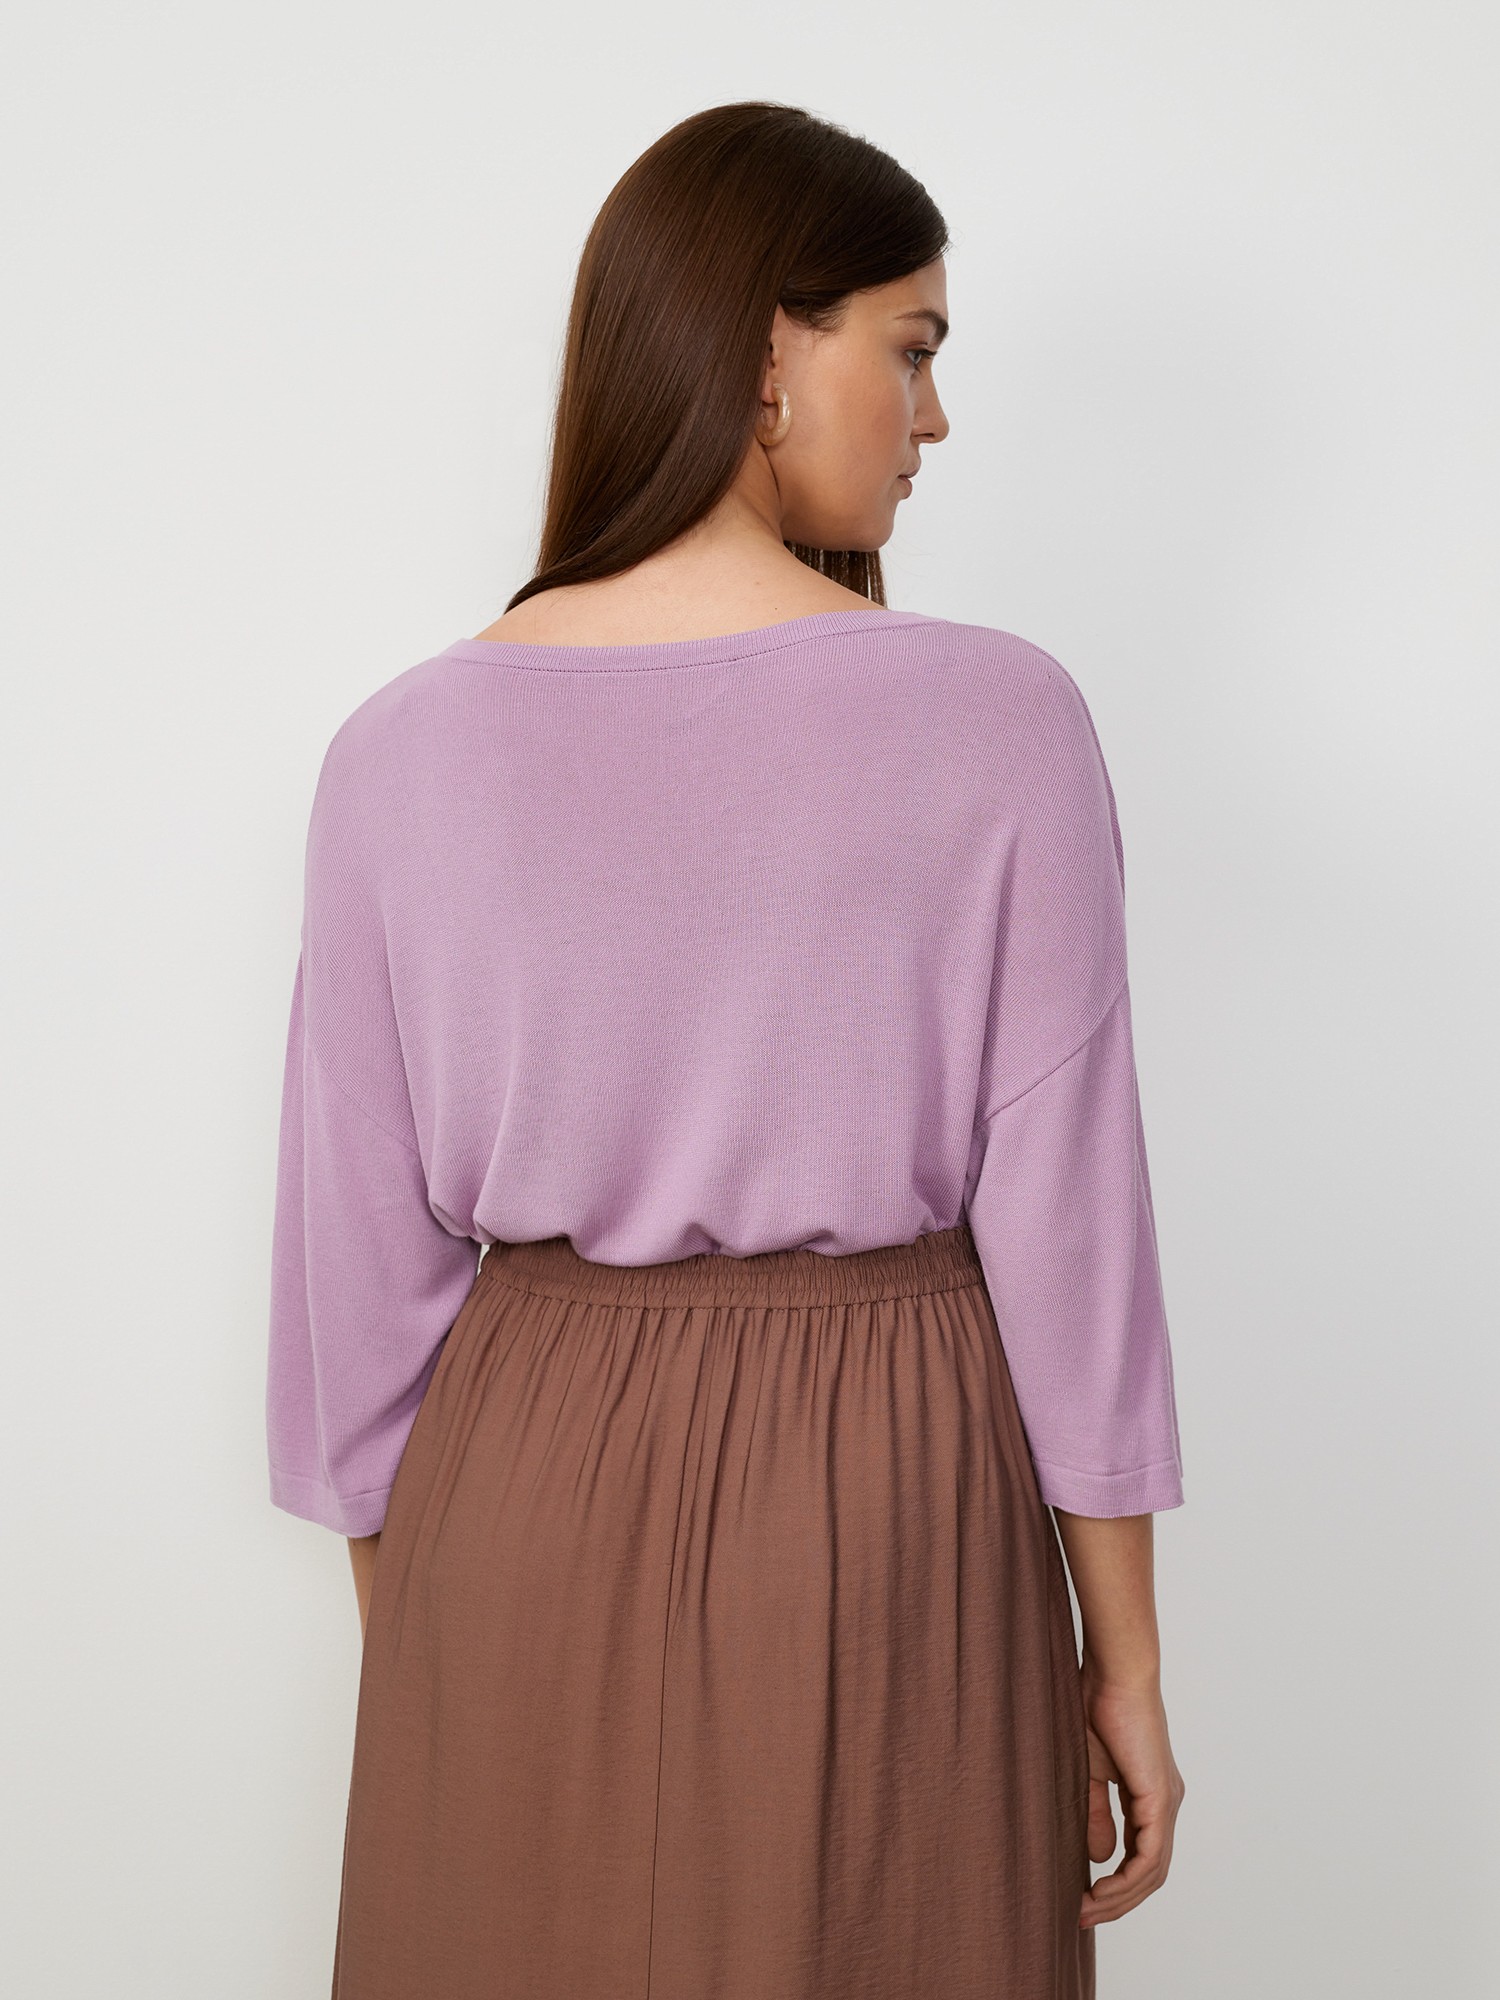 Блуза вязаная с монилью Lalis BL1069V, цвет фиолетовый, размер 52 - фото 4